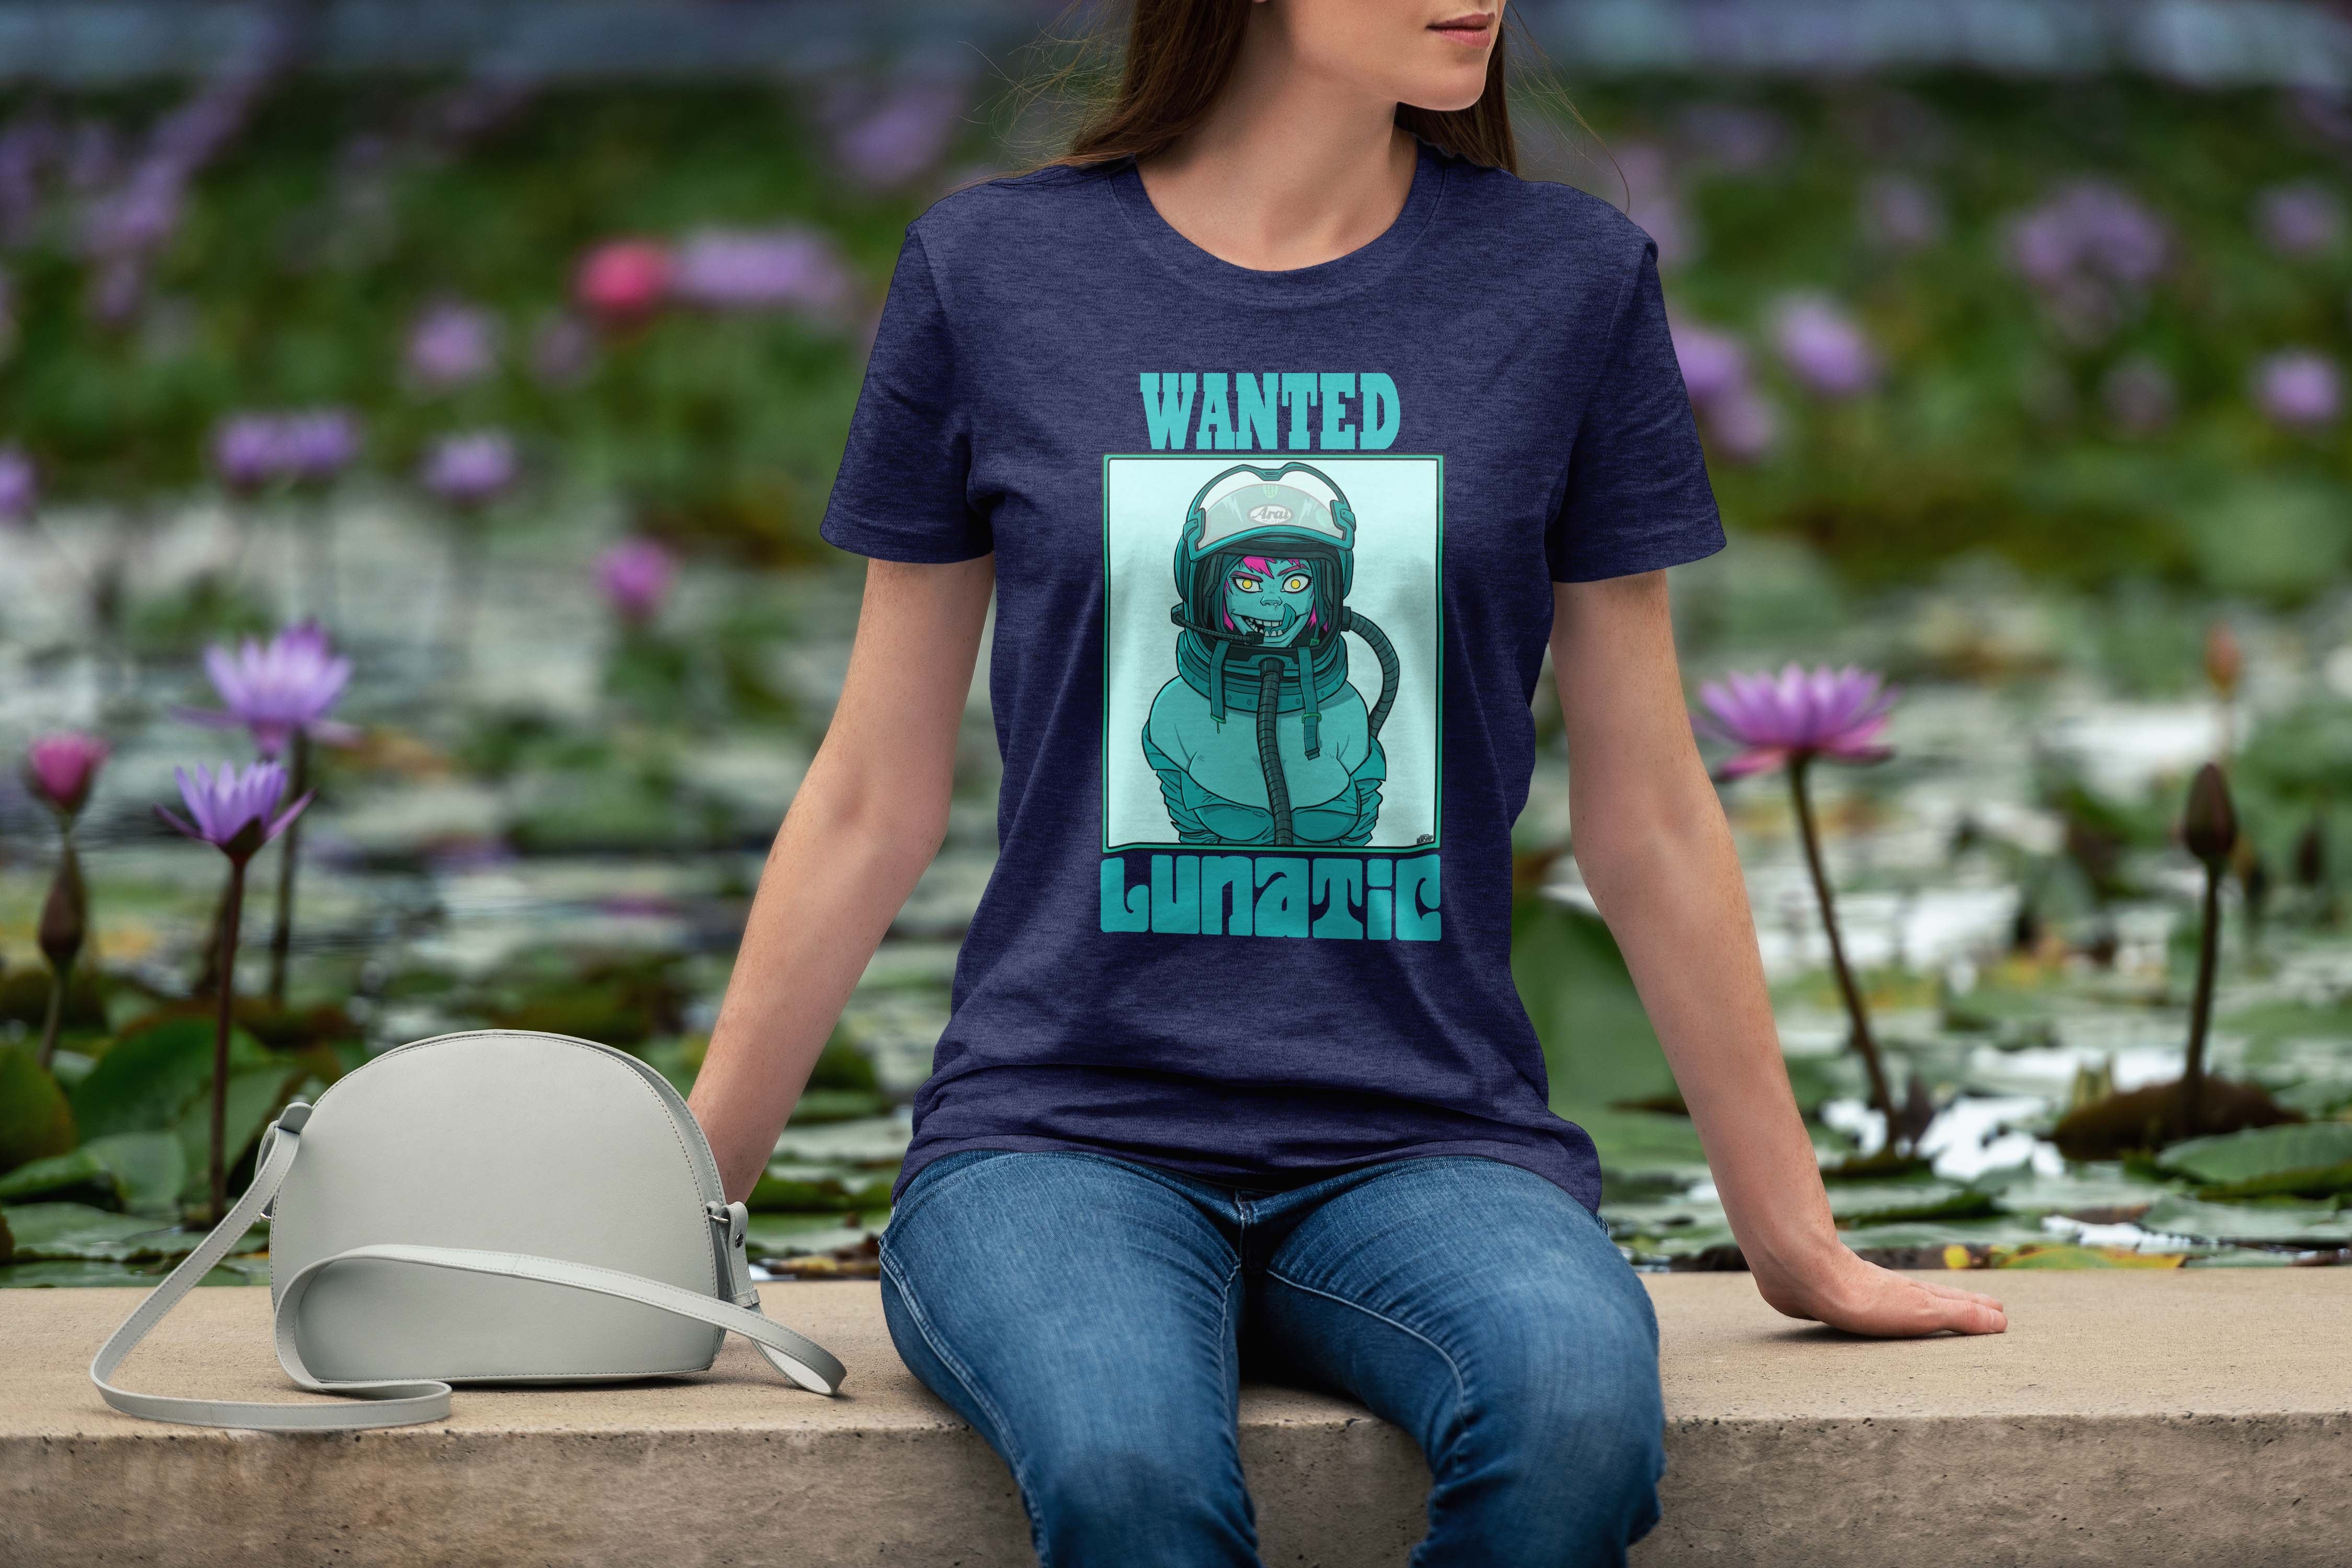 Unique and cool Gorillaz-style lunatic T-Shirt illustration